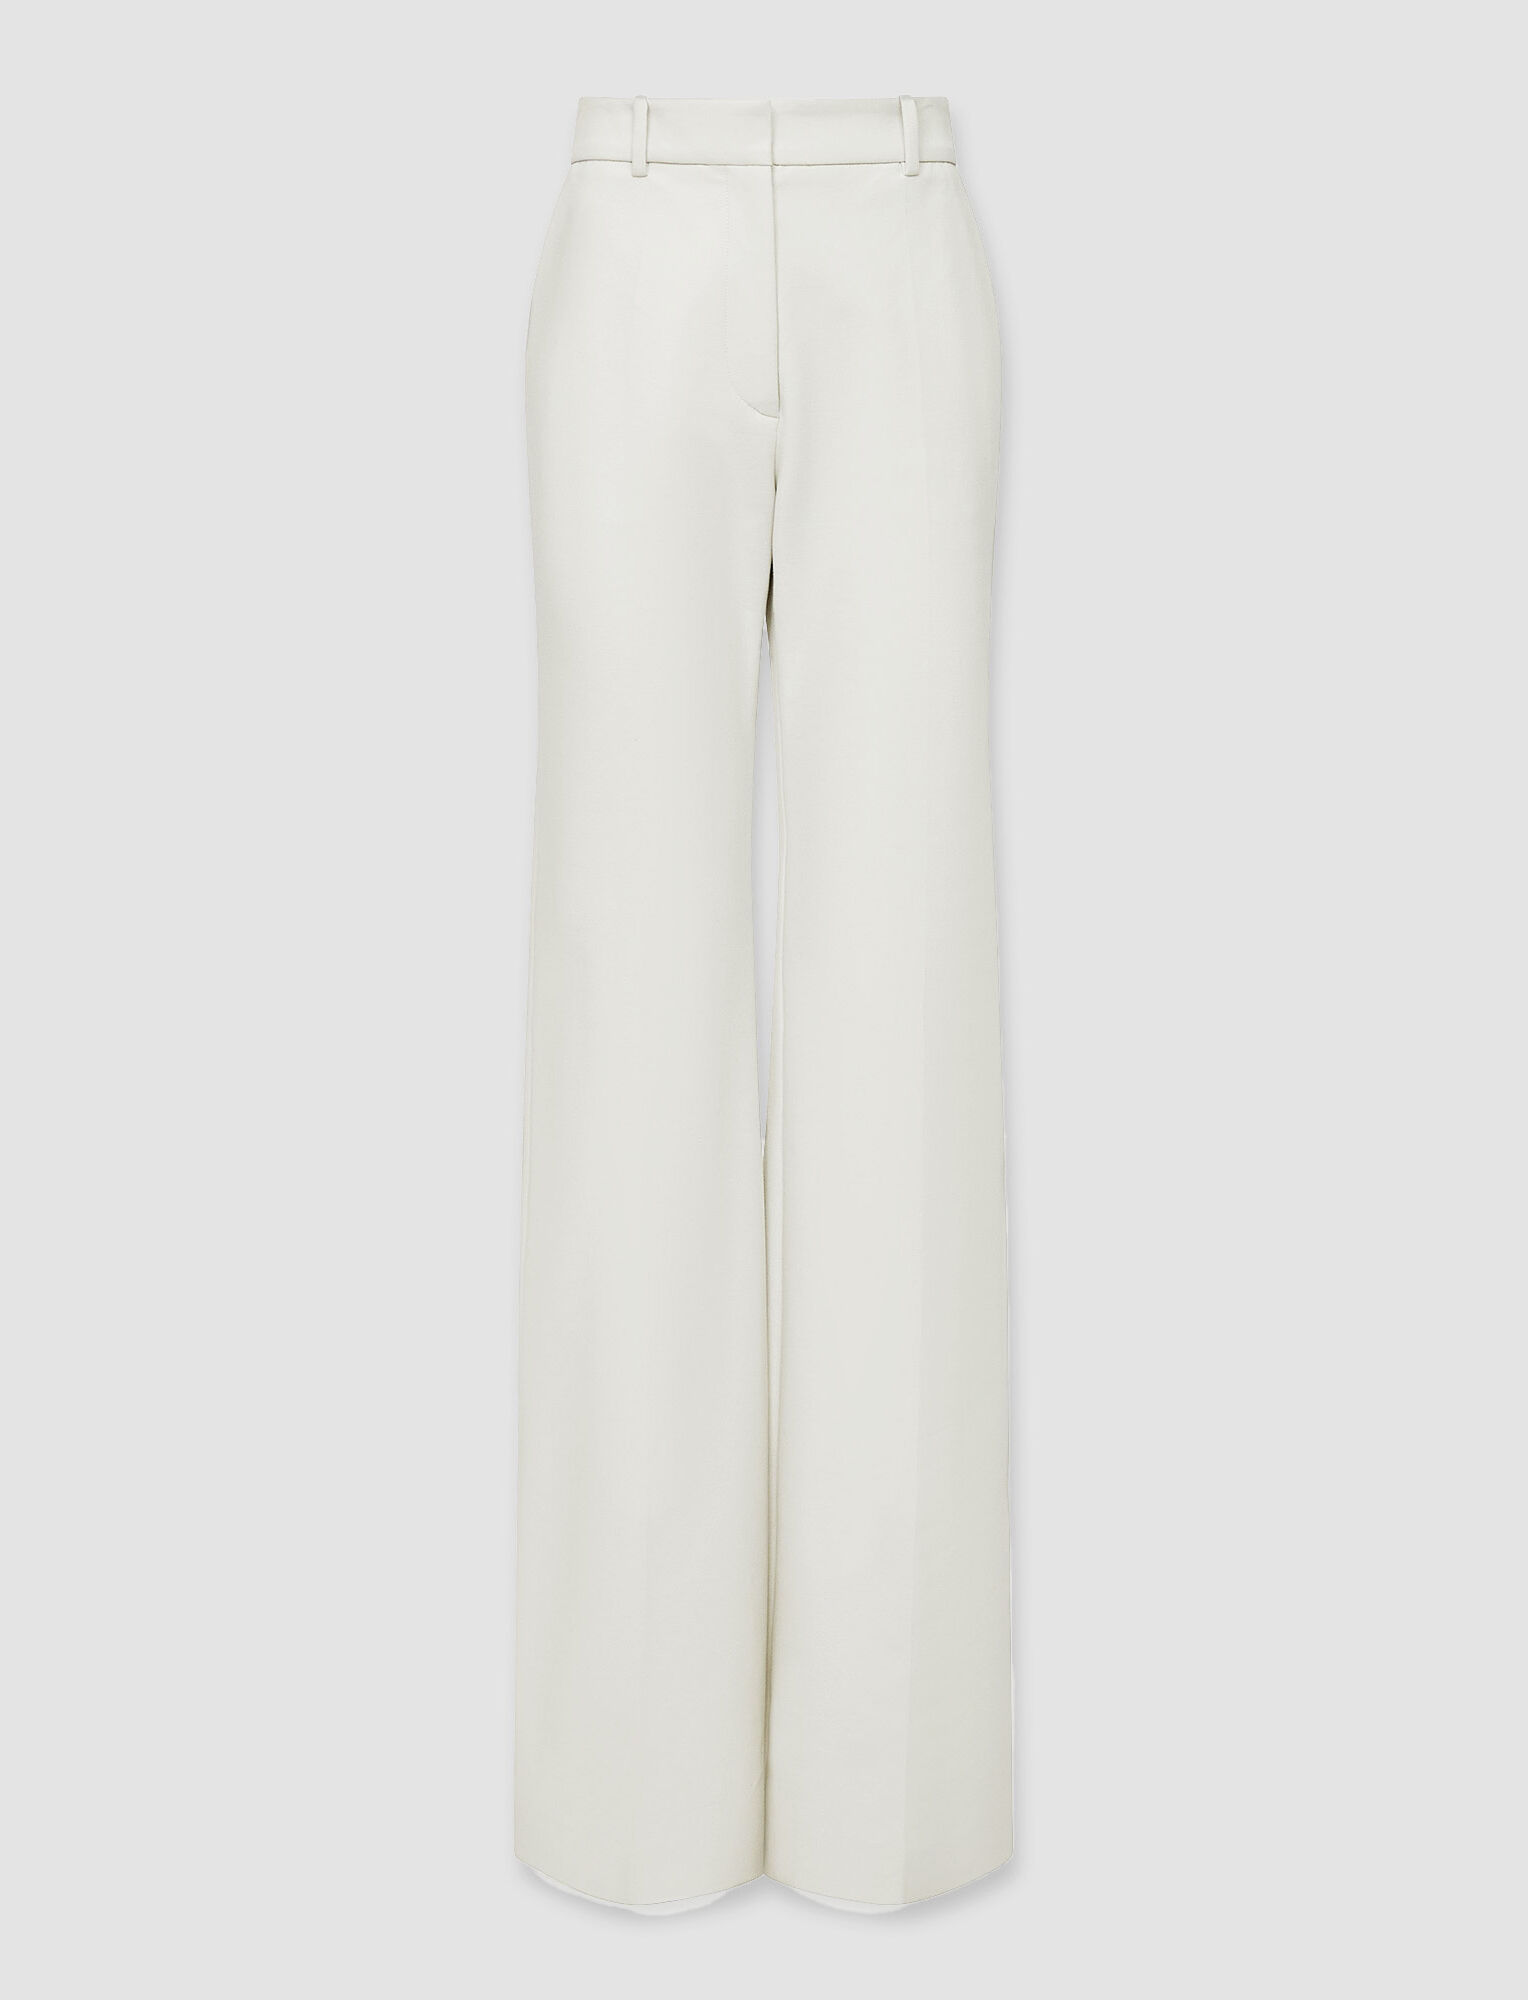 Joseph, Toile Stretch Tafira Trousers - Shorter Length, in Ivory